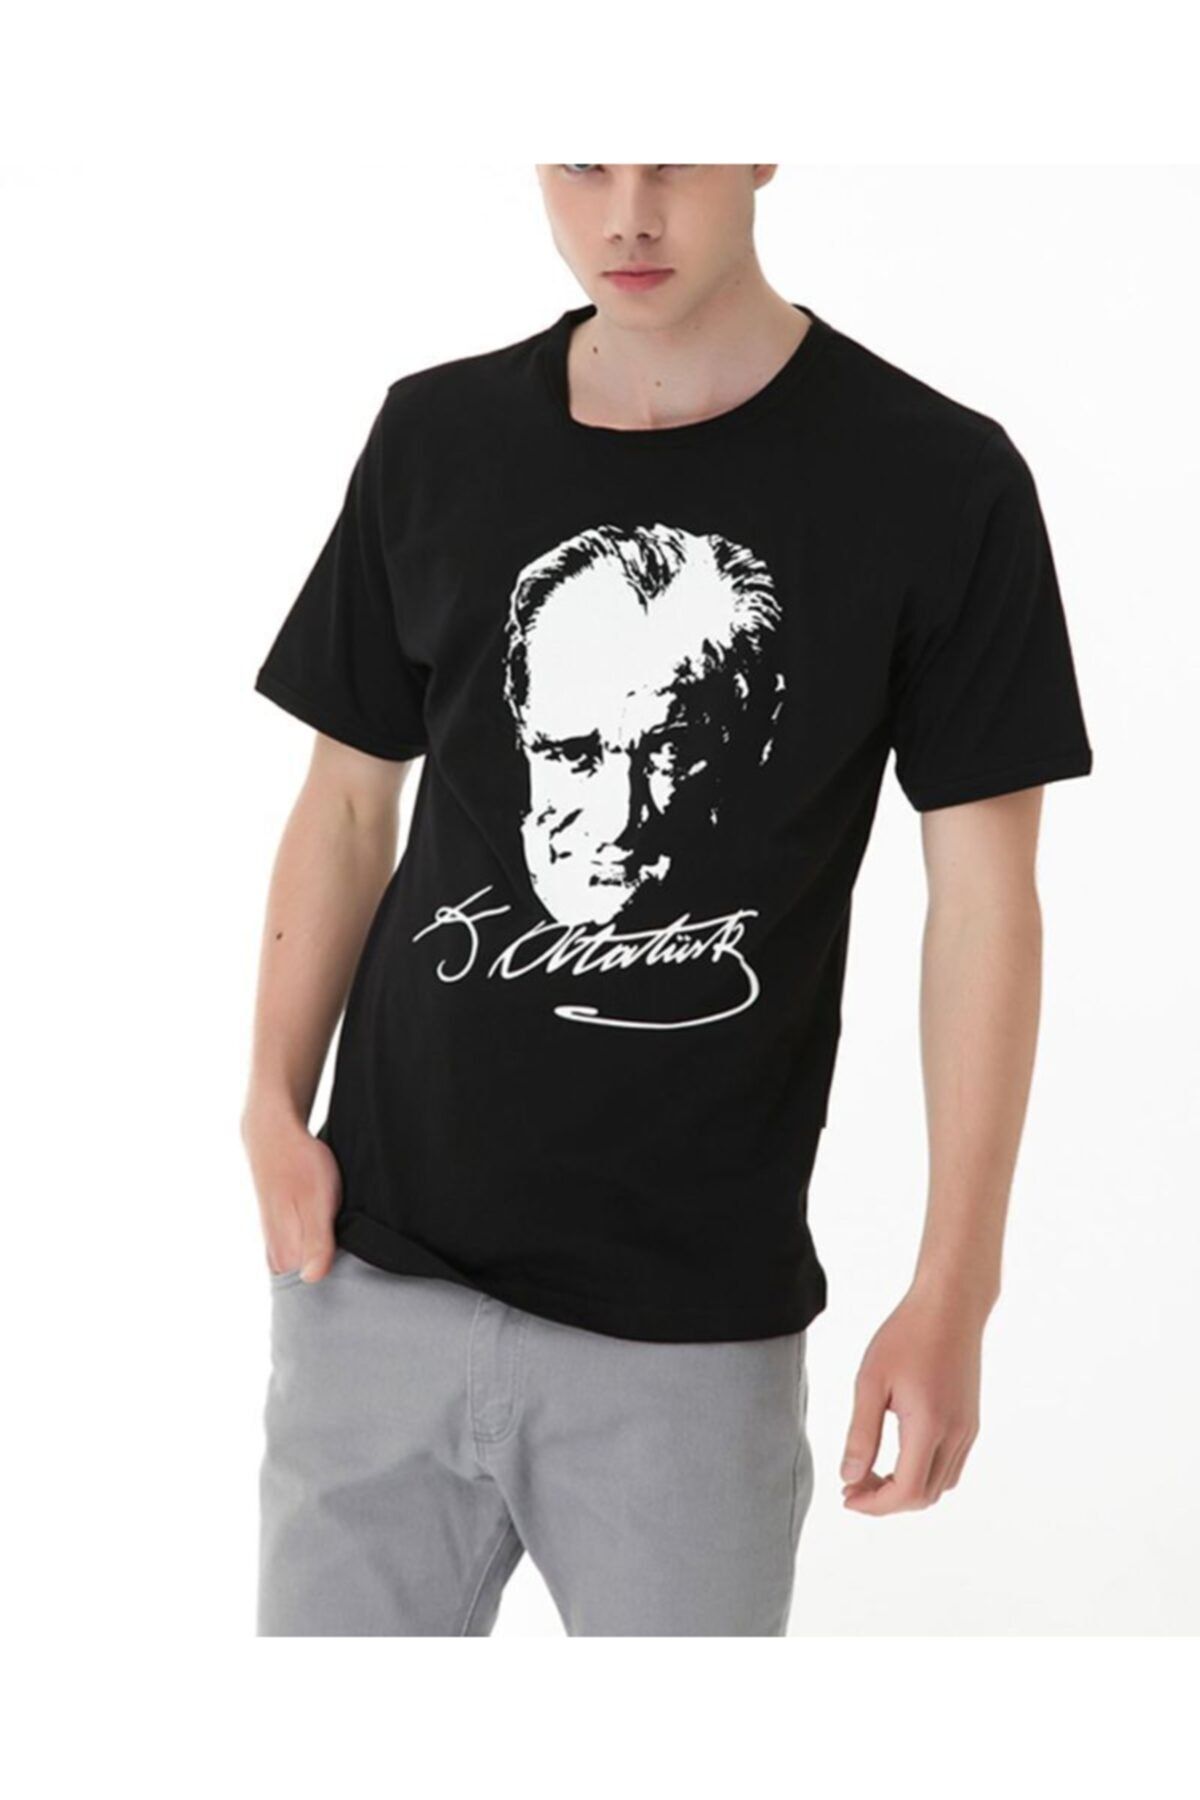 Köstebek Mustafa Kemal Atatürk - Gençliğe Hitabe Unisex T-shirt